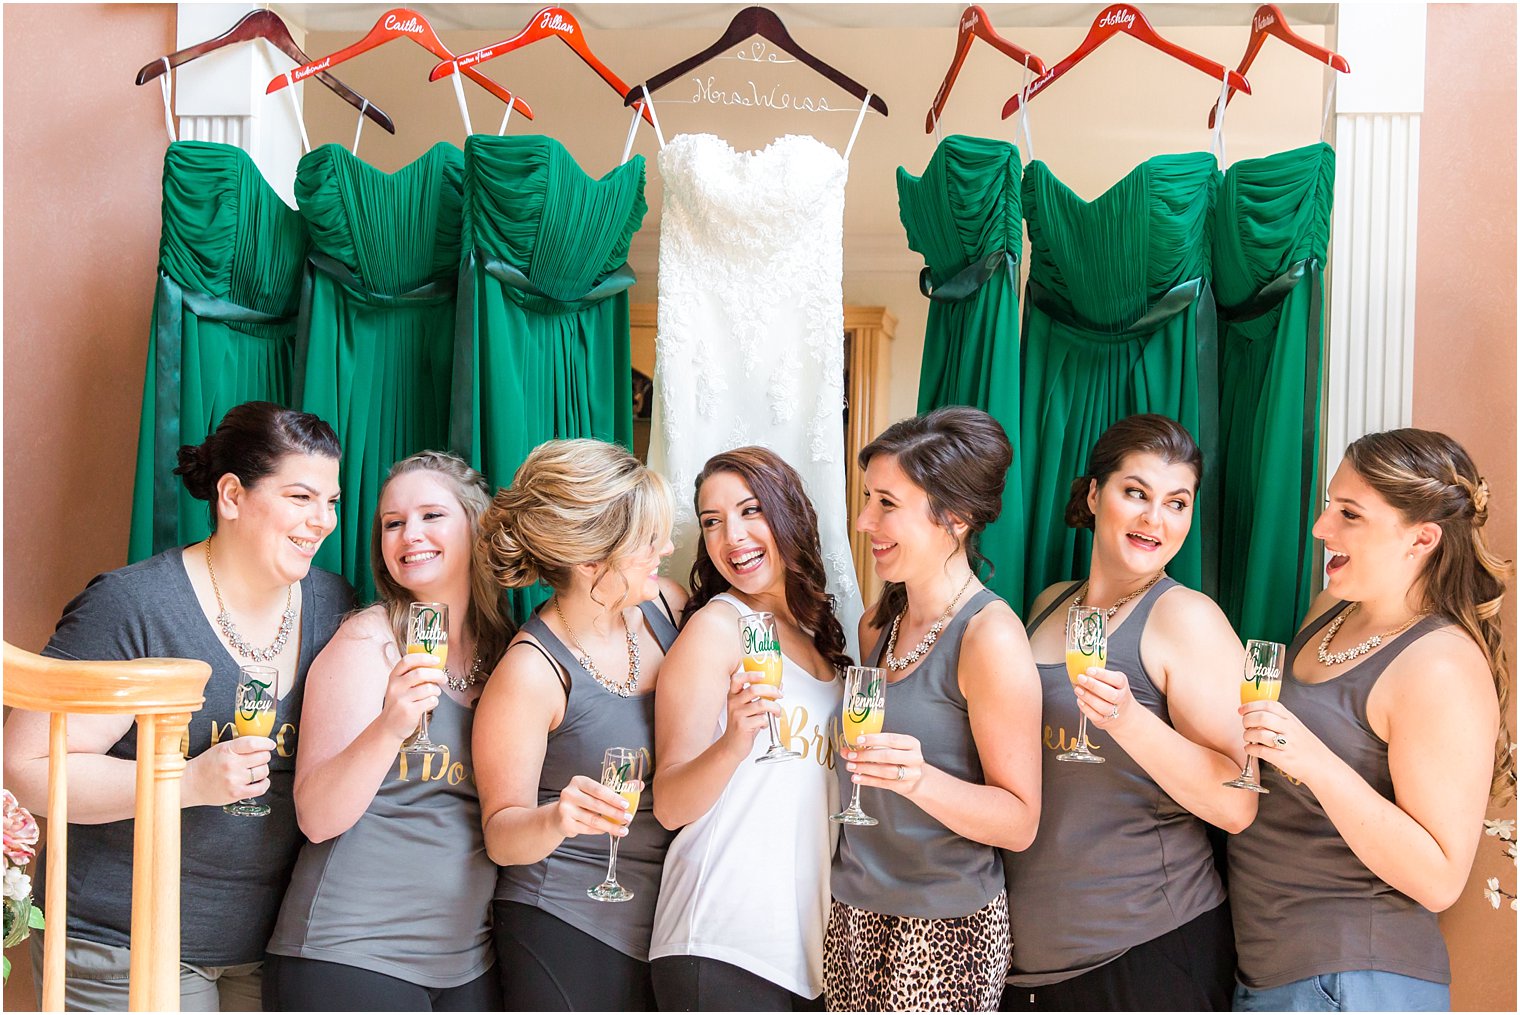 Bridesmaids drinking mimosas in gray tank tops